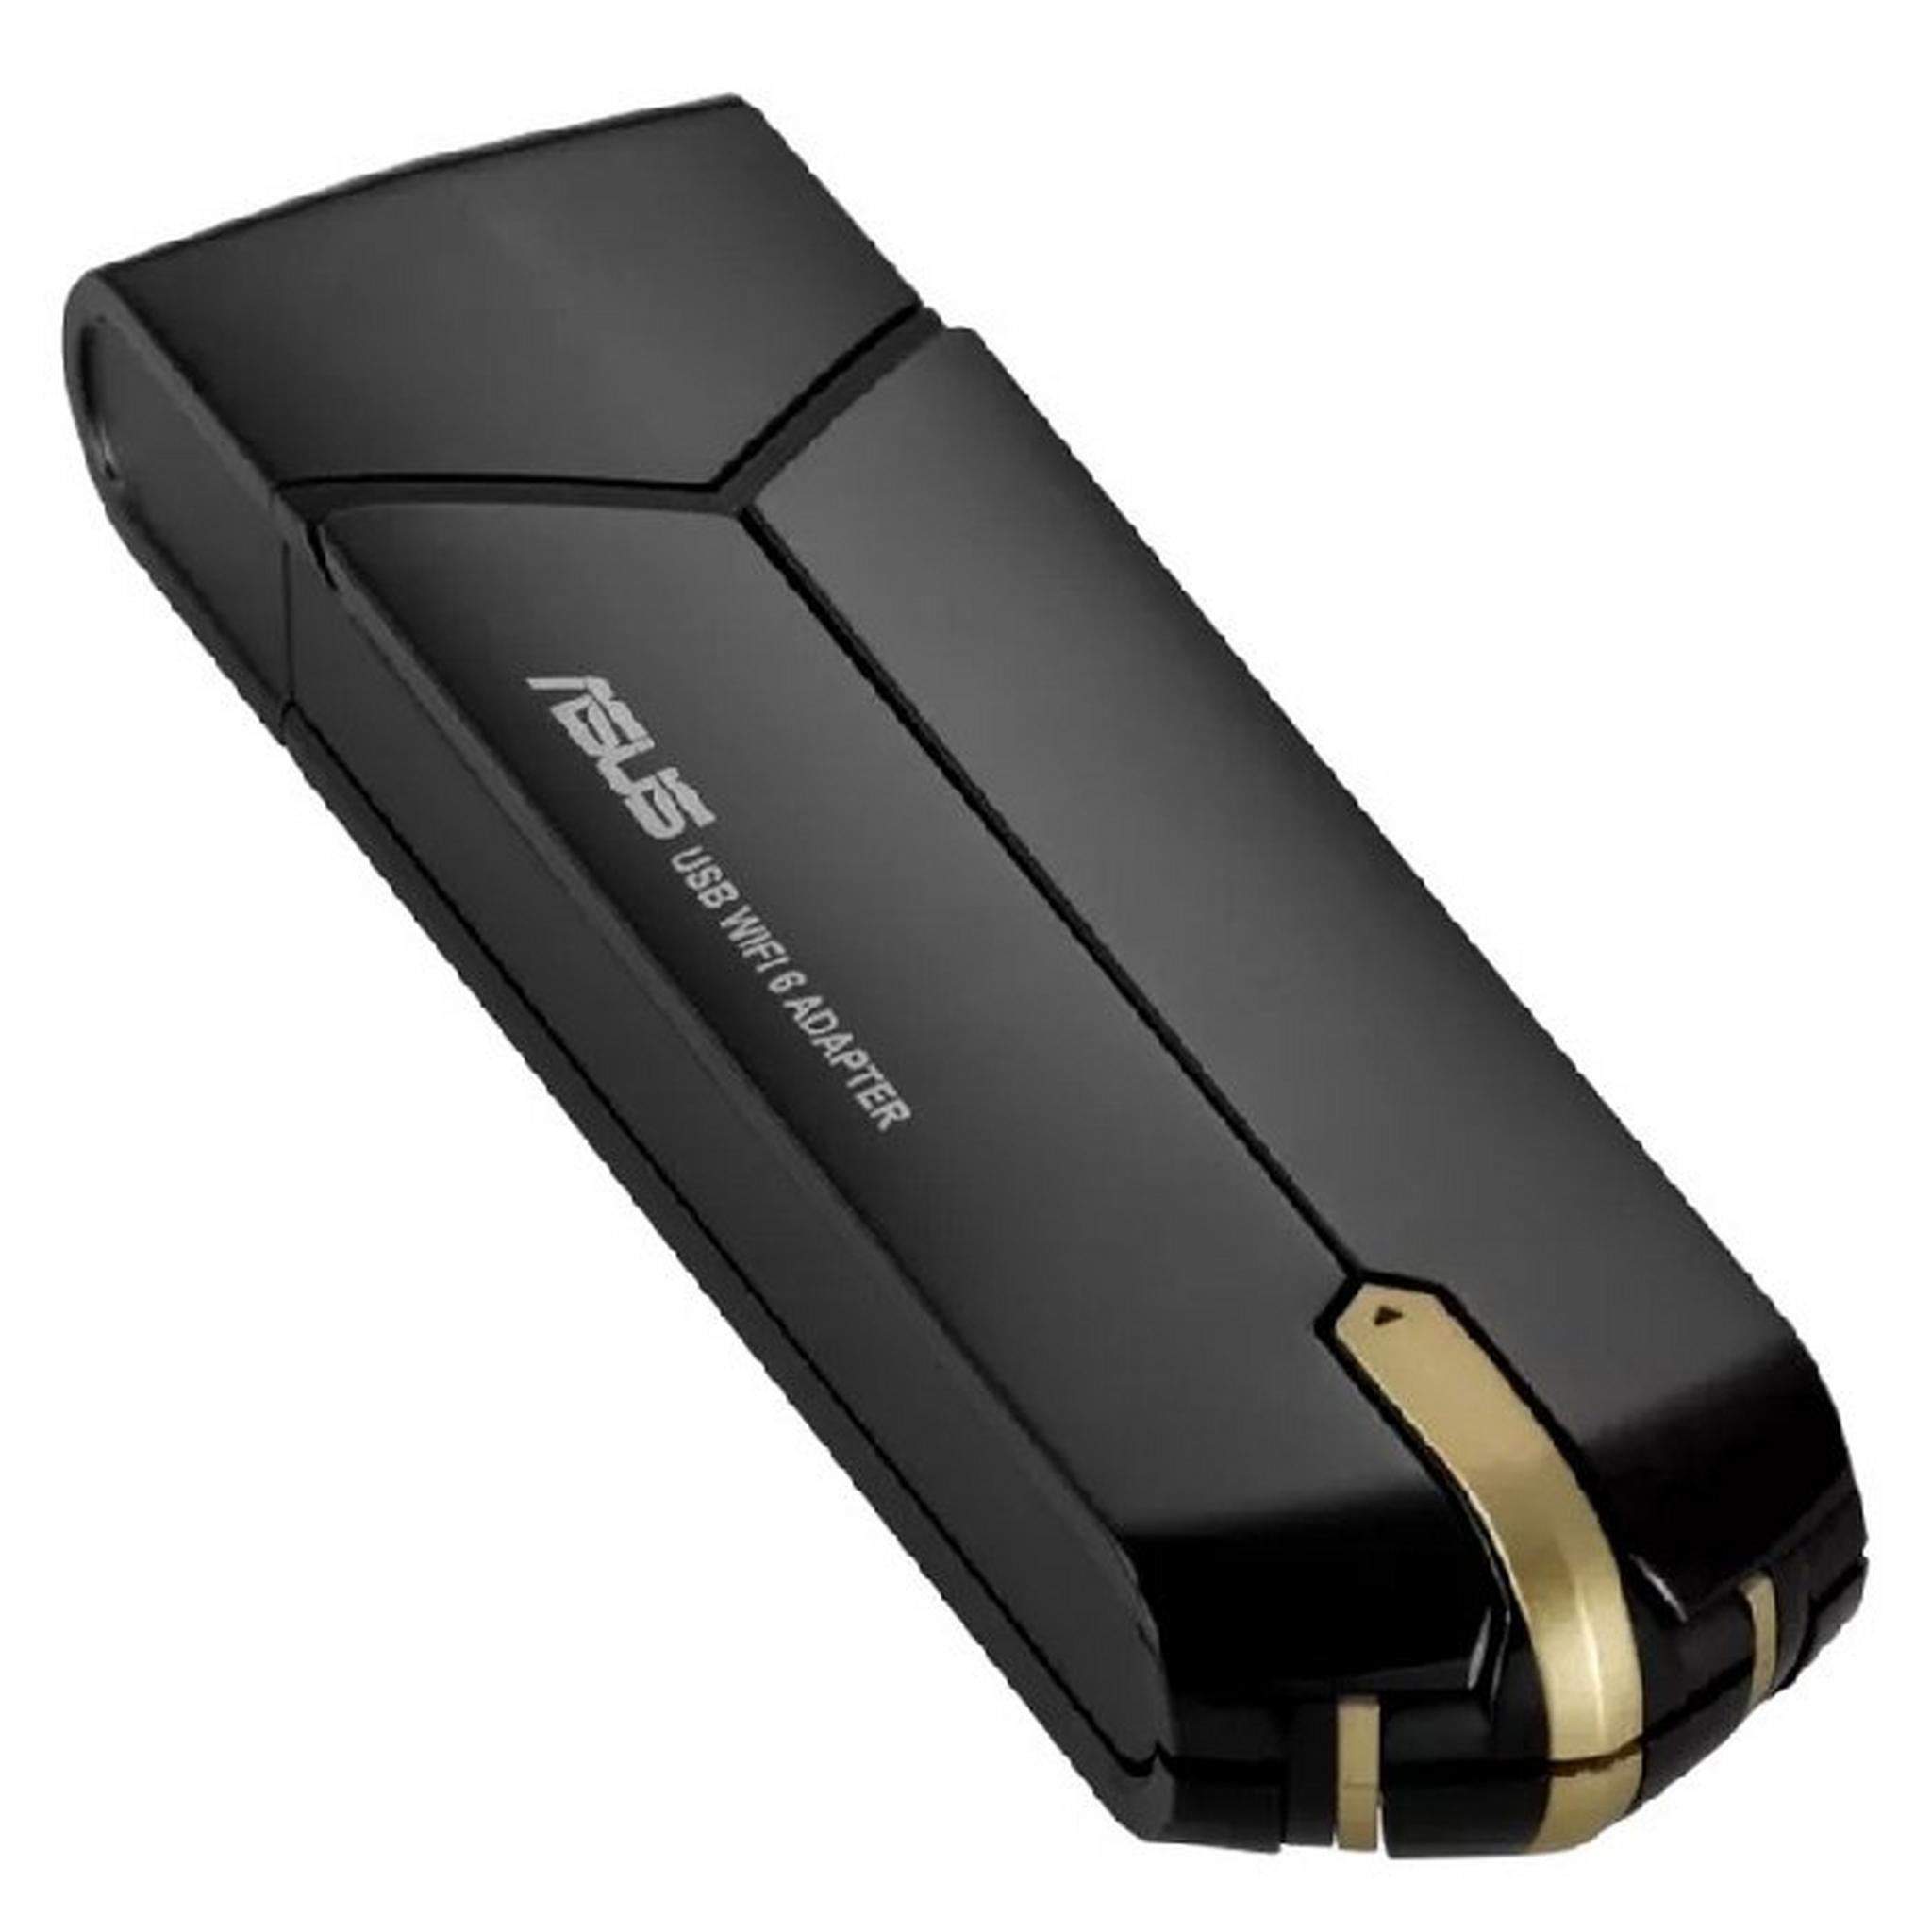 ASUS USB Adaptor, Wi-Fi 6, Dual Band, AX1800